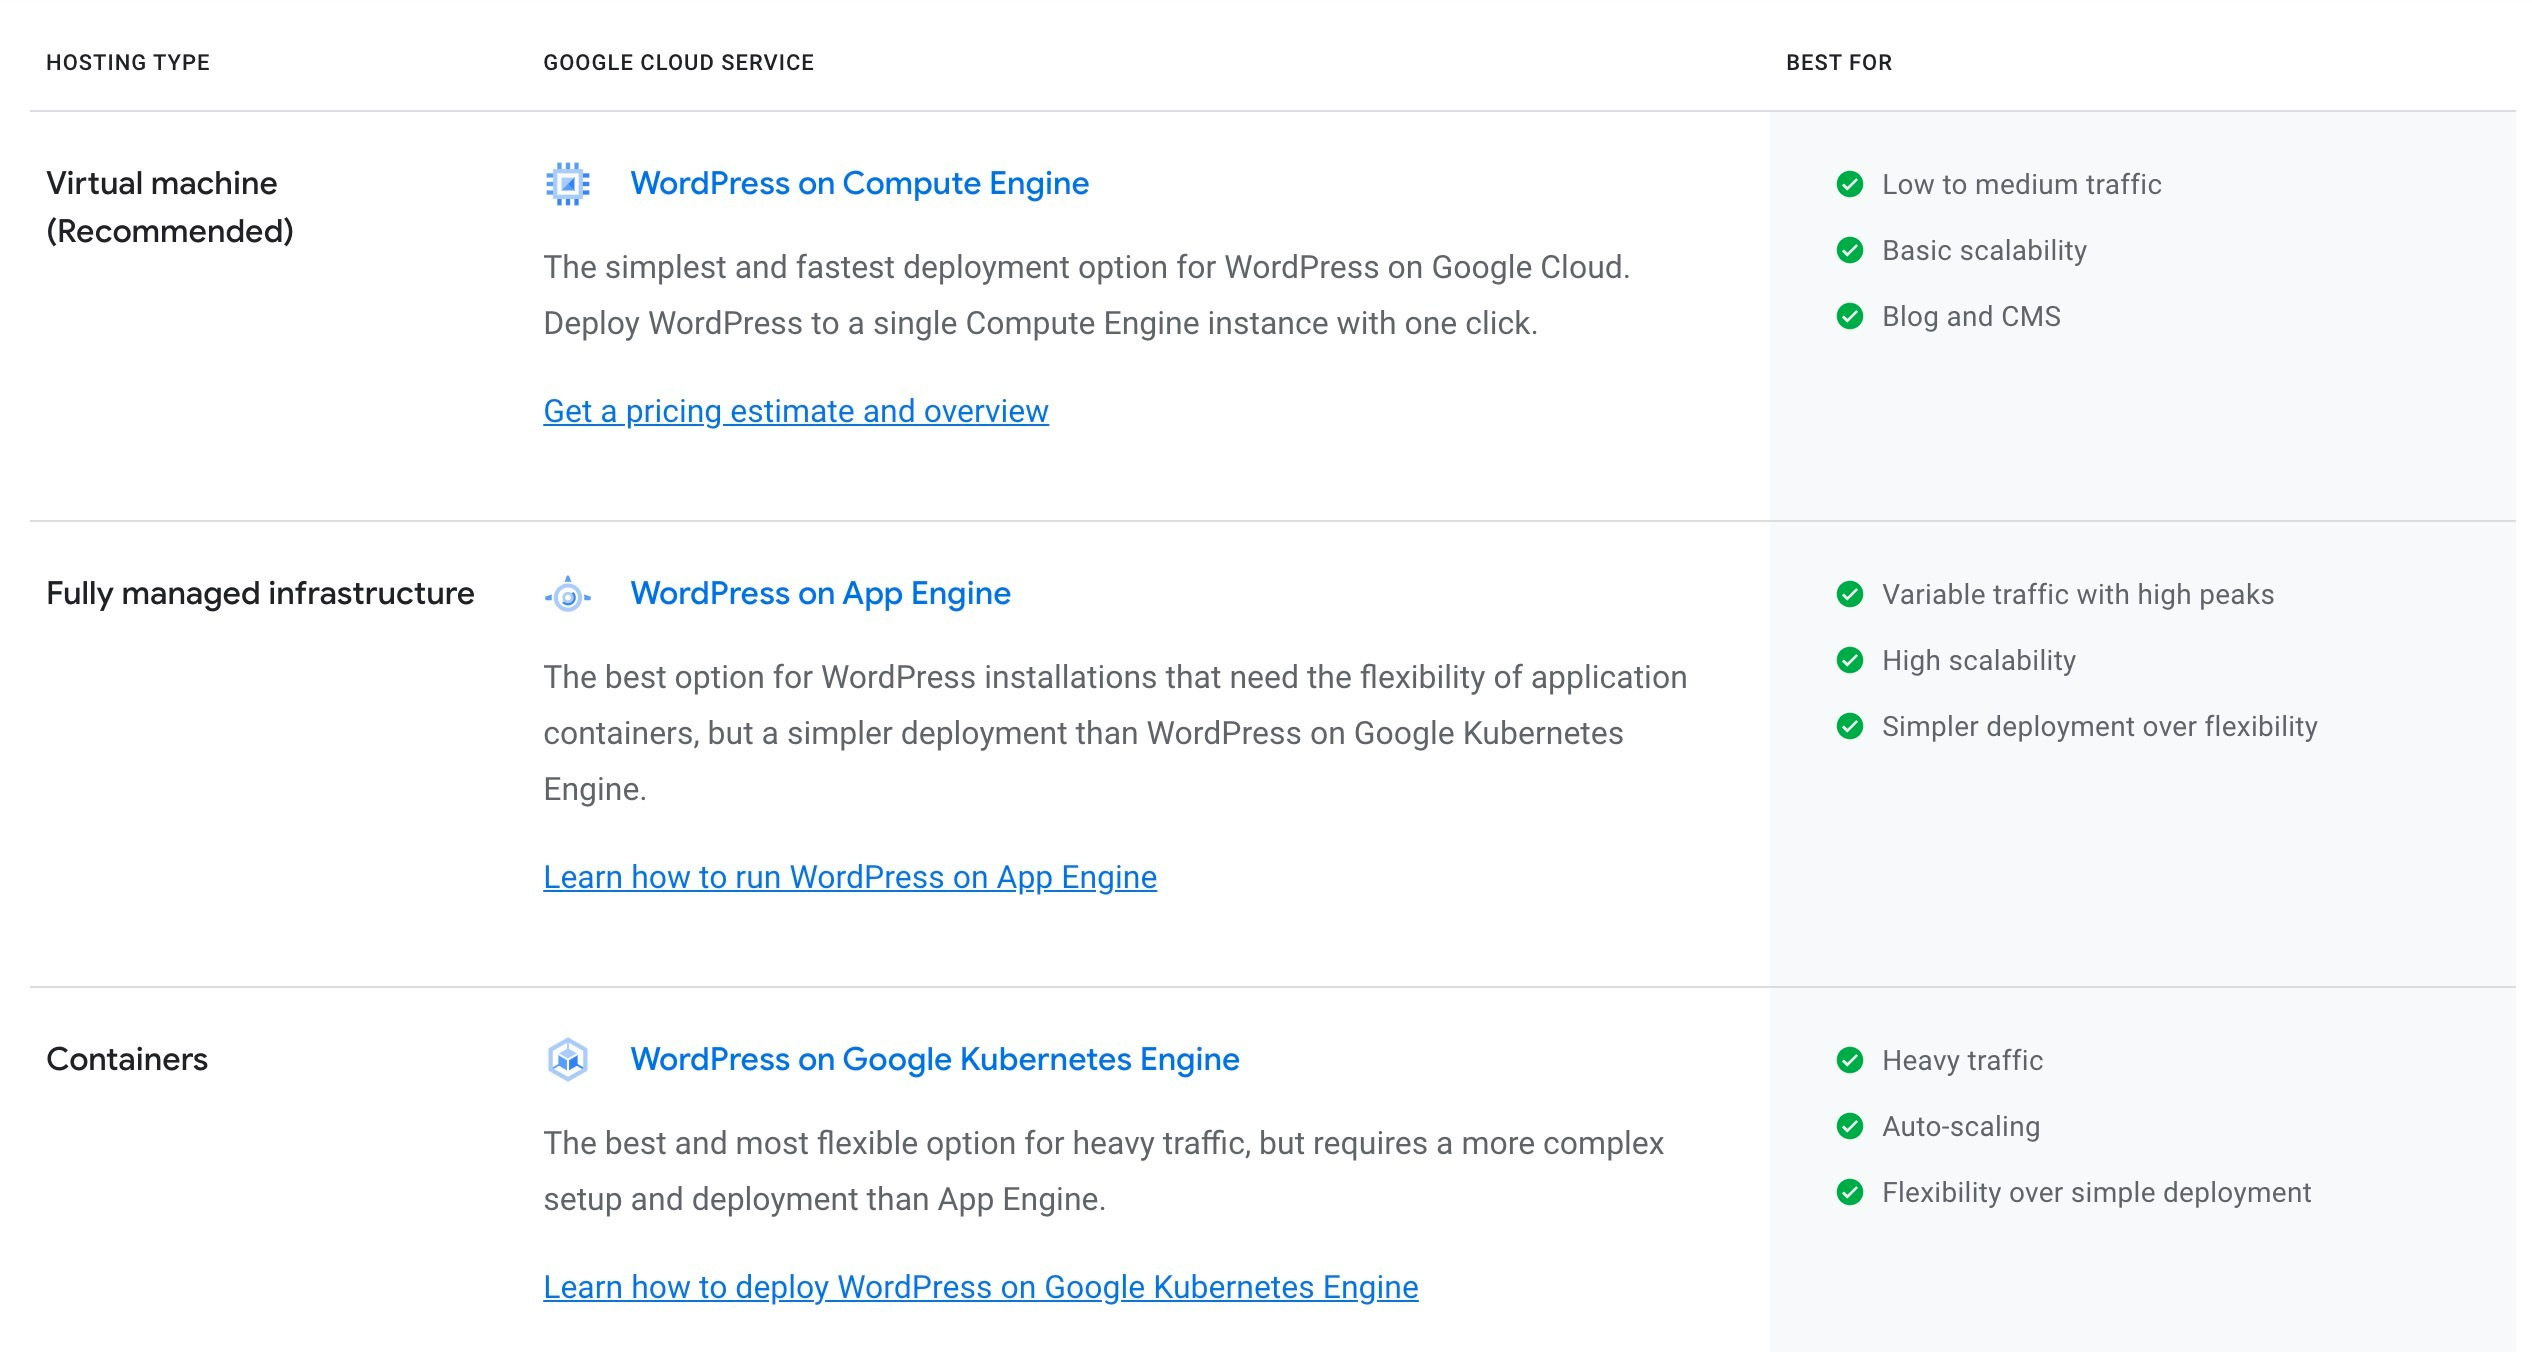 WordPress options on Google Cloud